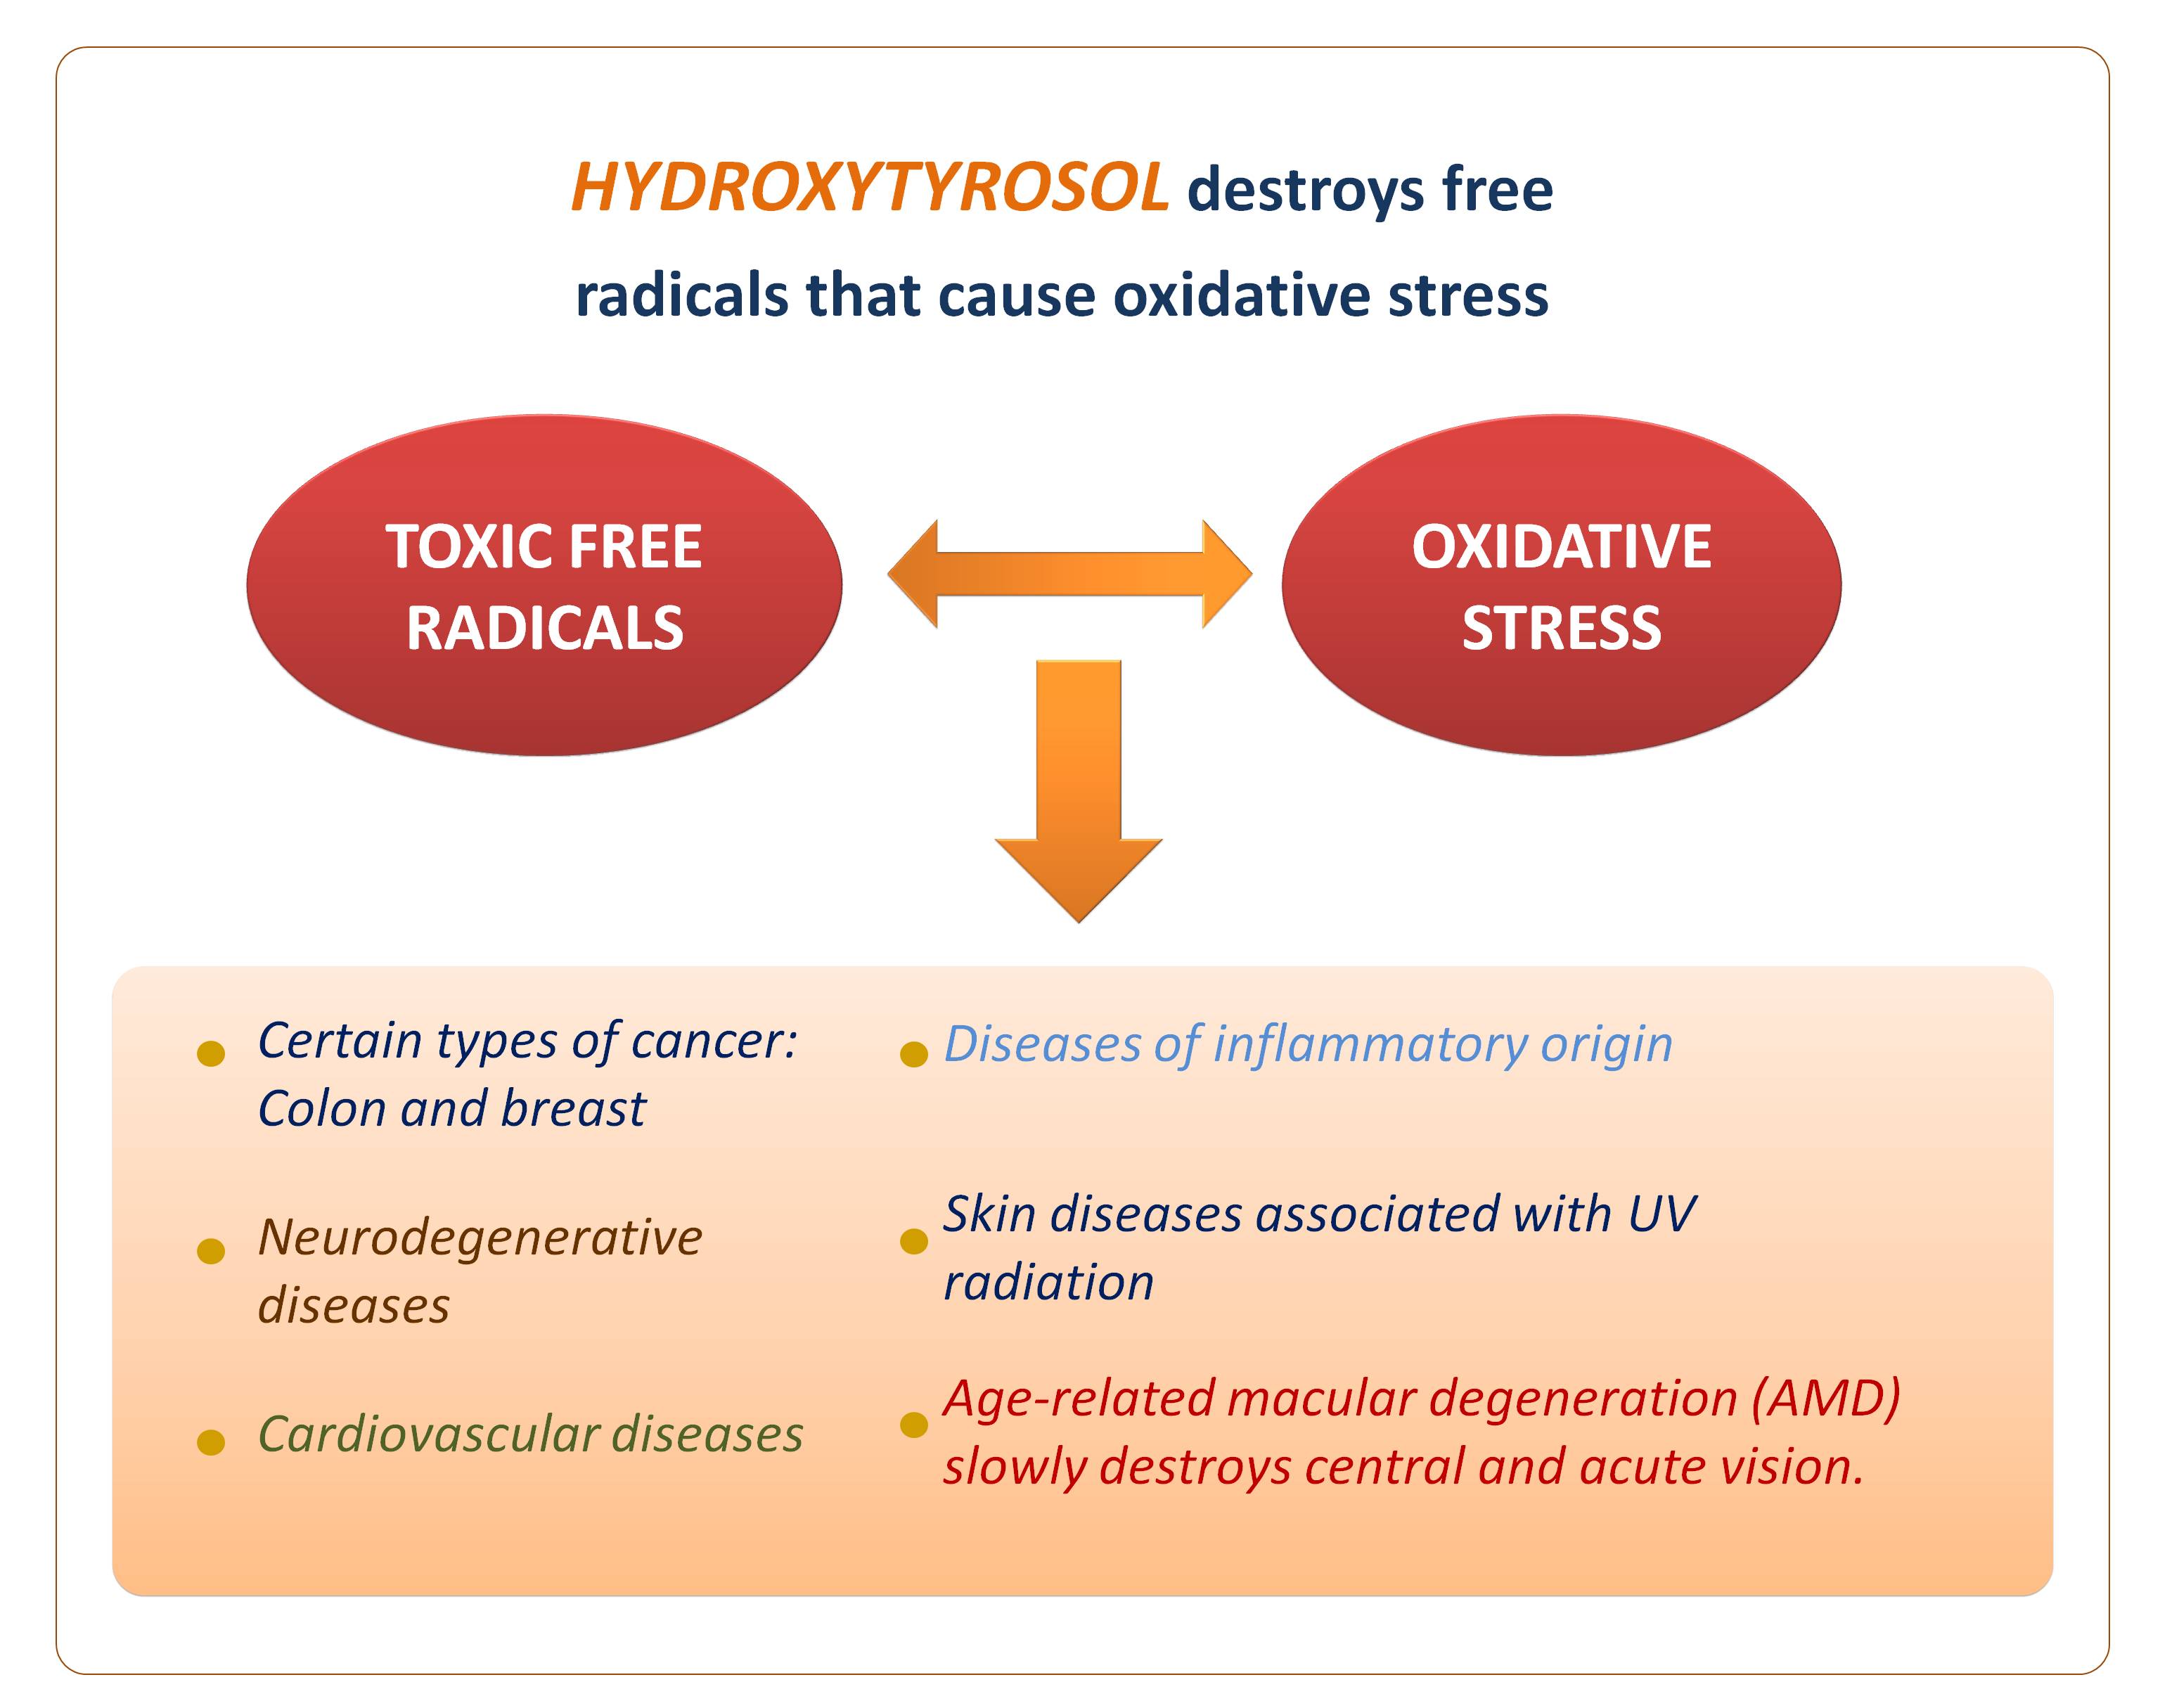 Hydroxytyrosol has multiple health benefits